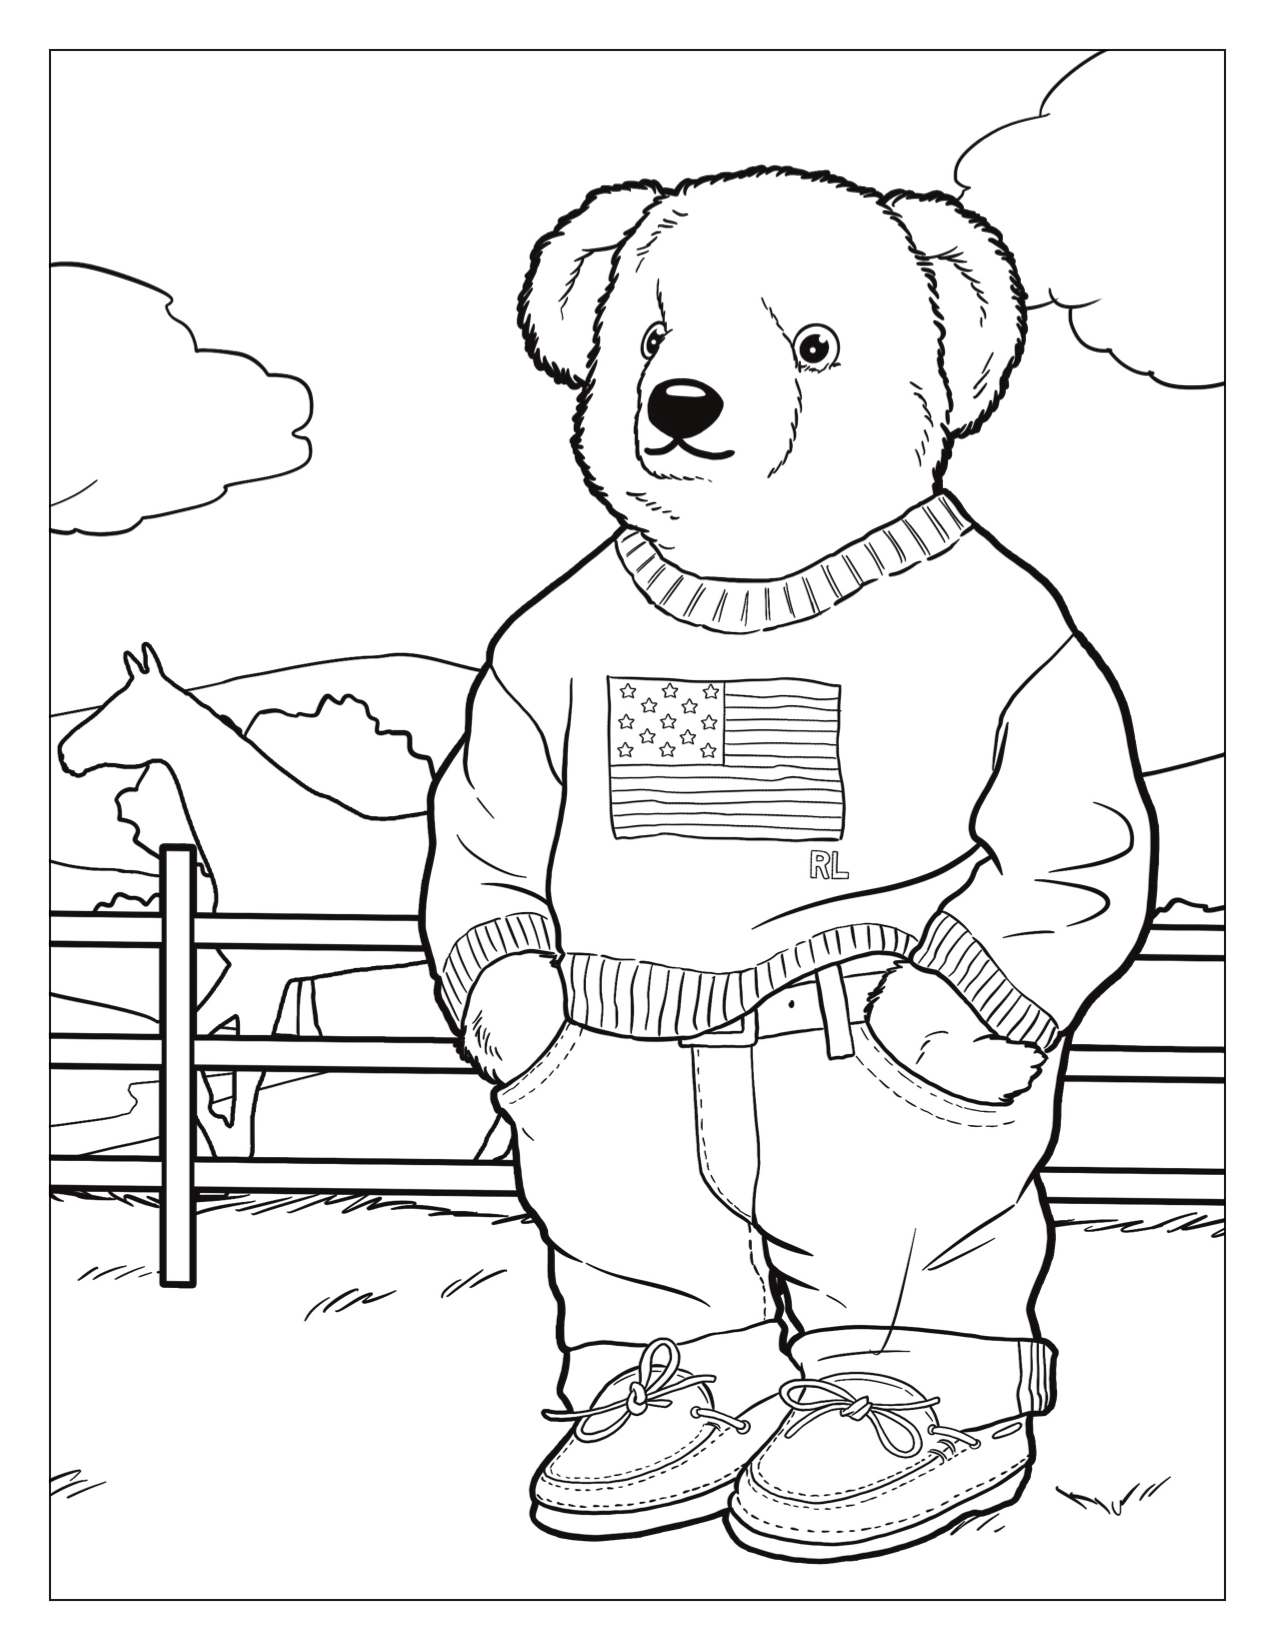 The Polo Bear Coloring Book by Polo Ralph Lauren